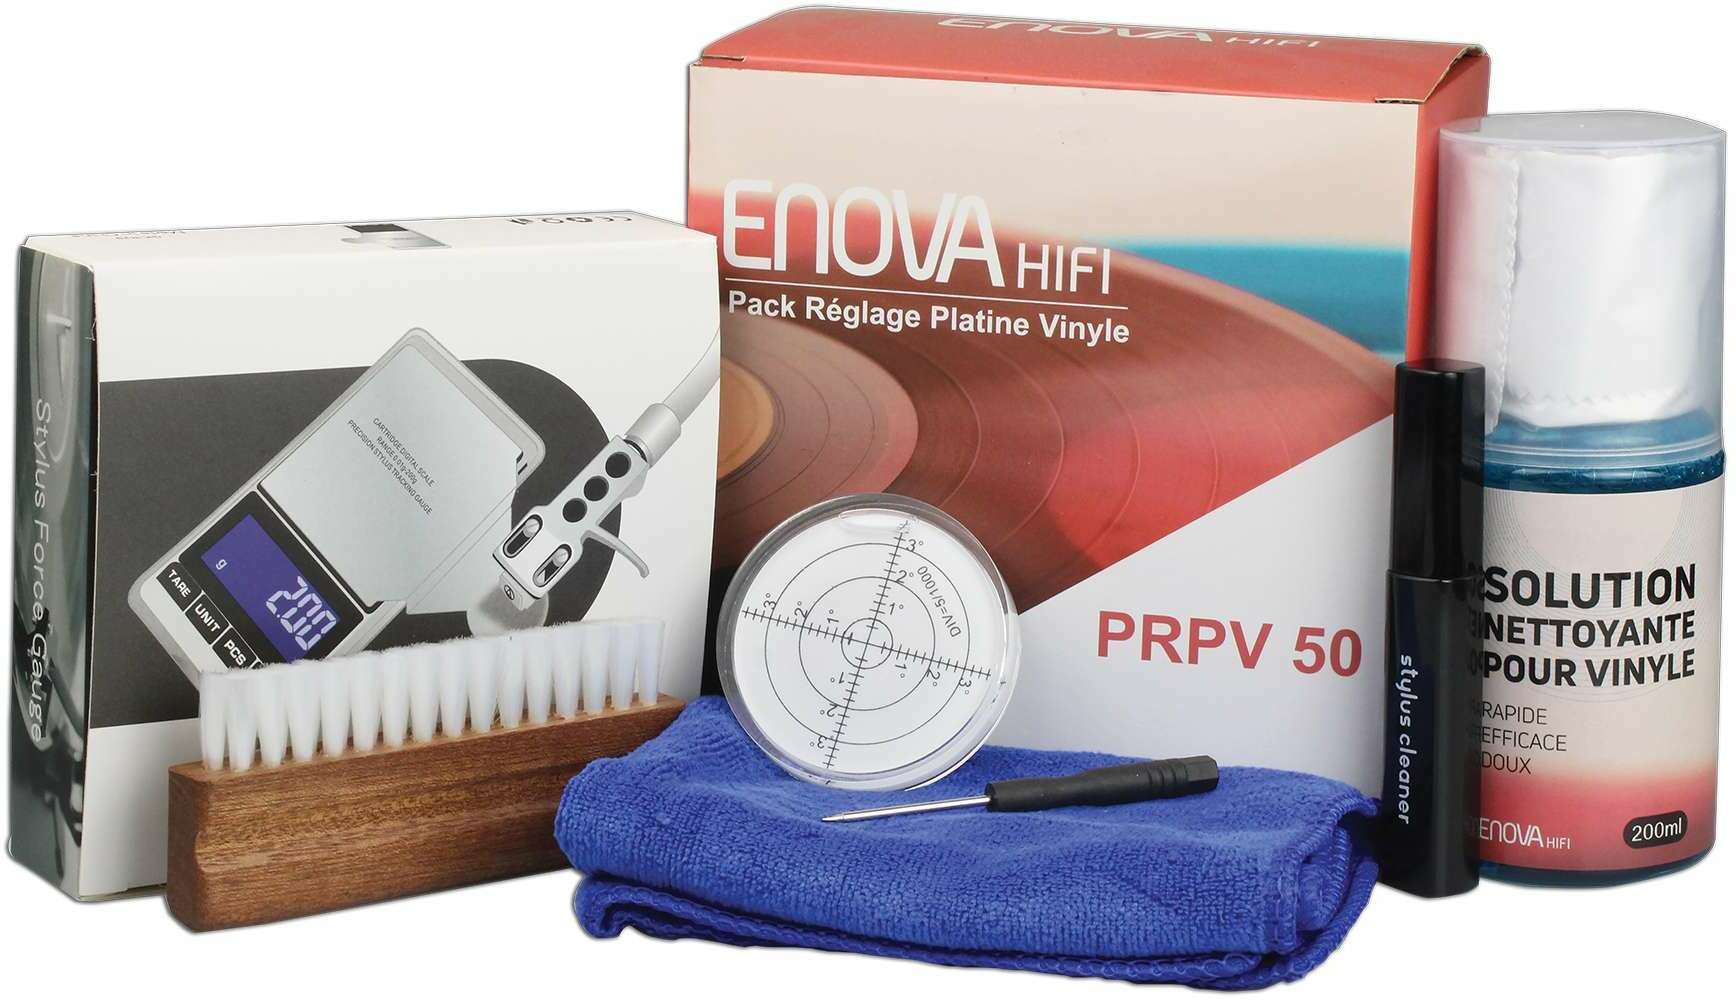 Enova Hifi Pack Reglage Platine Vinyle - Prpv 50 - Reinigungs-Kit - Main picture